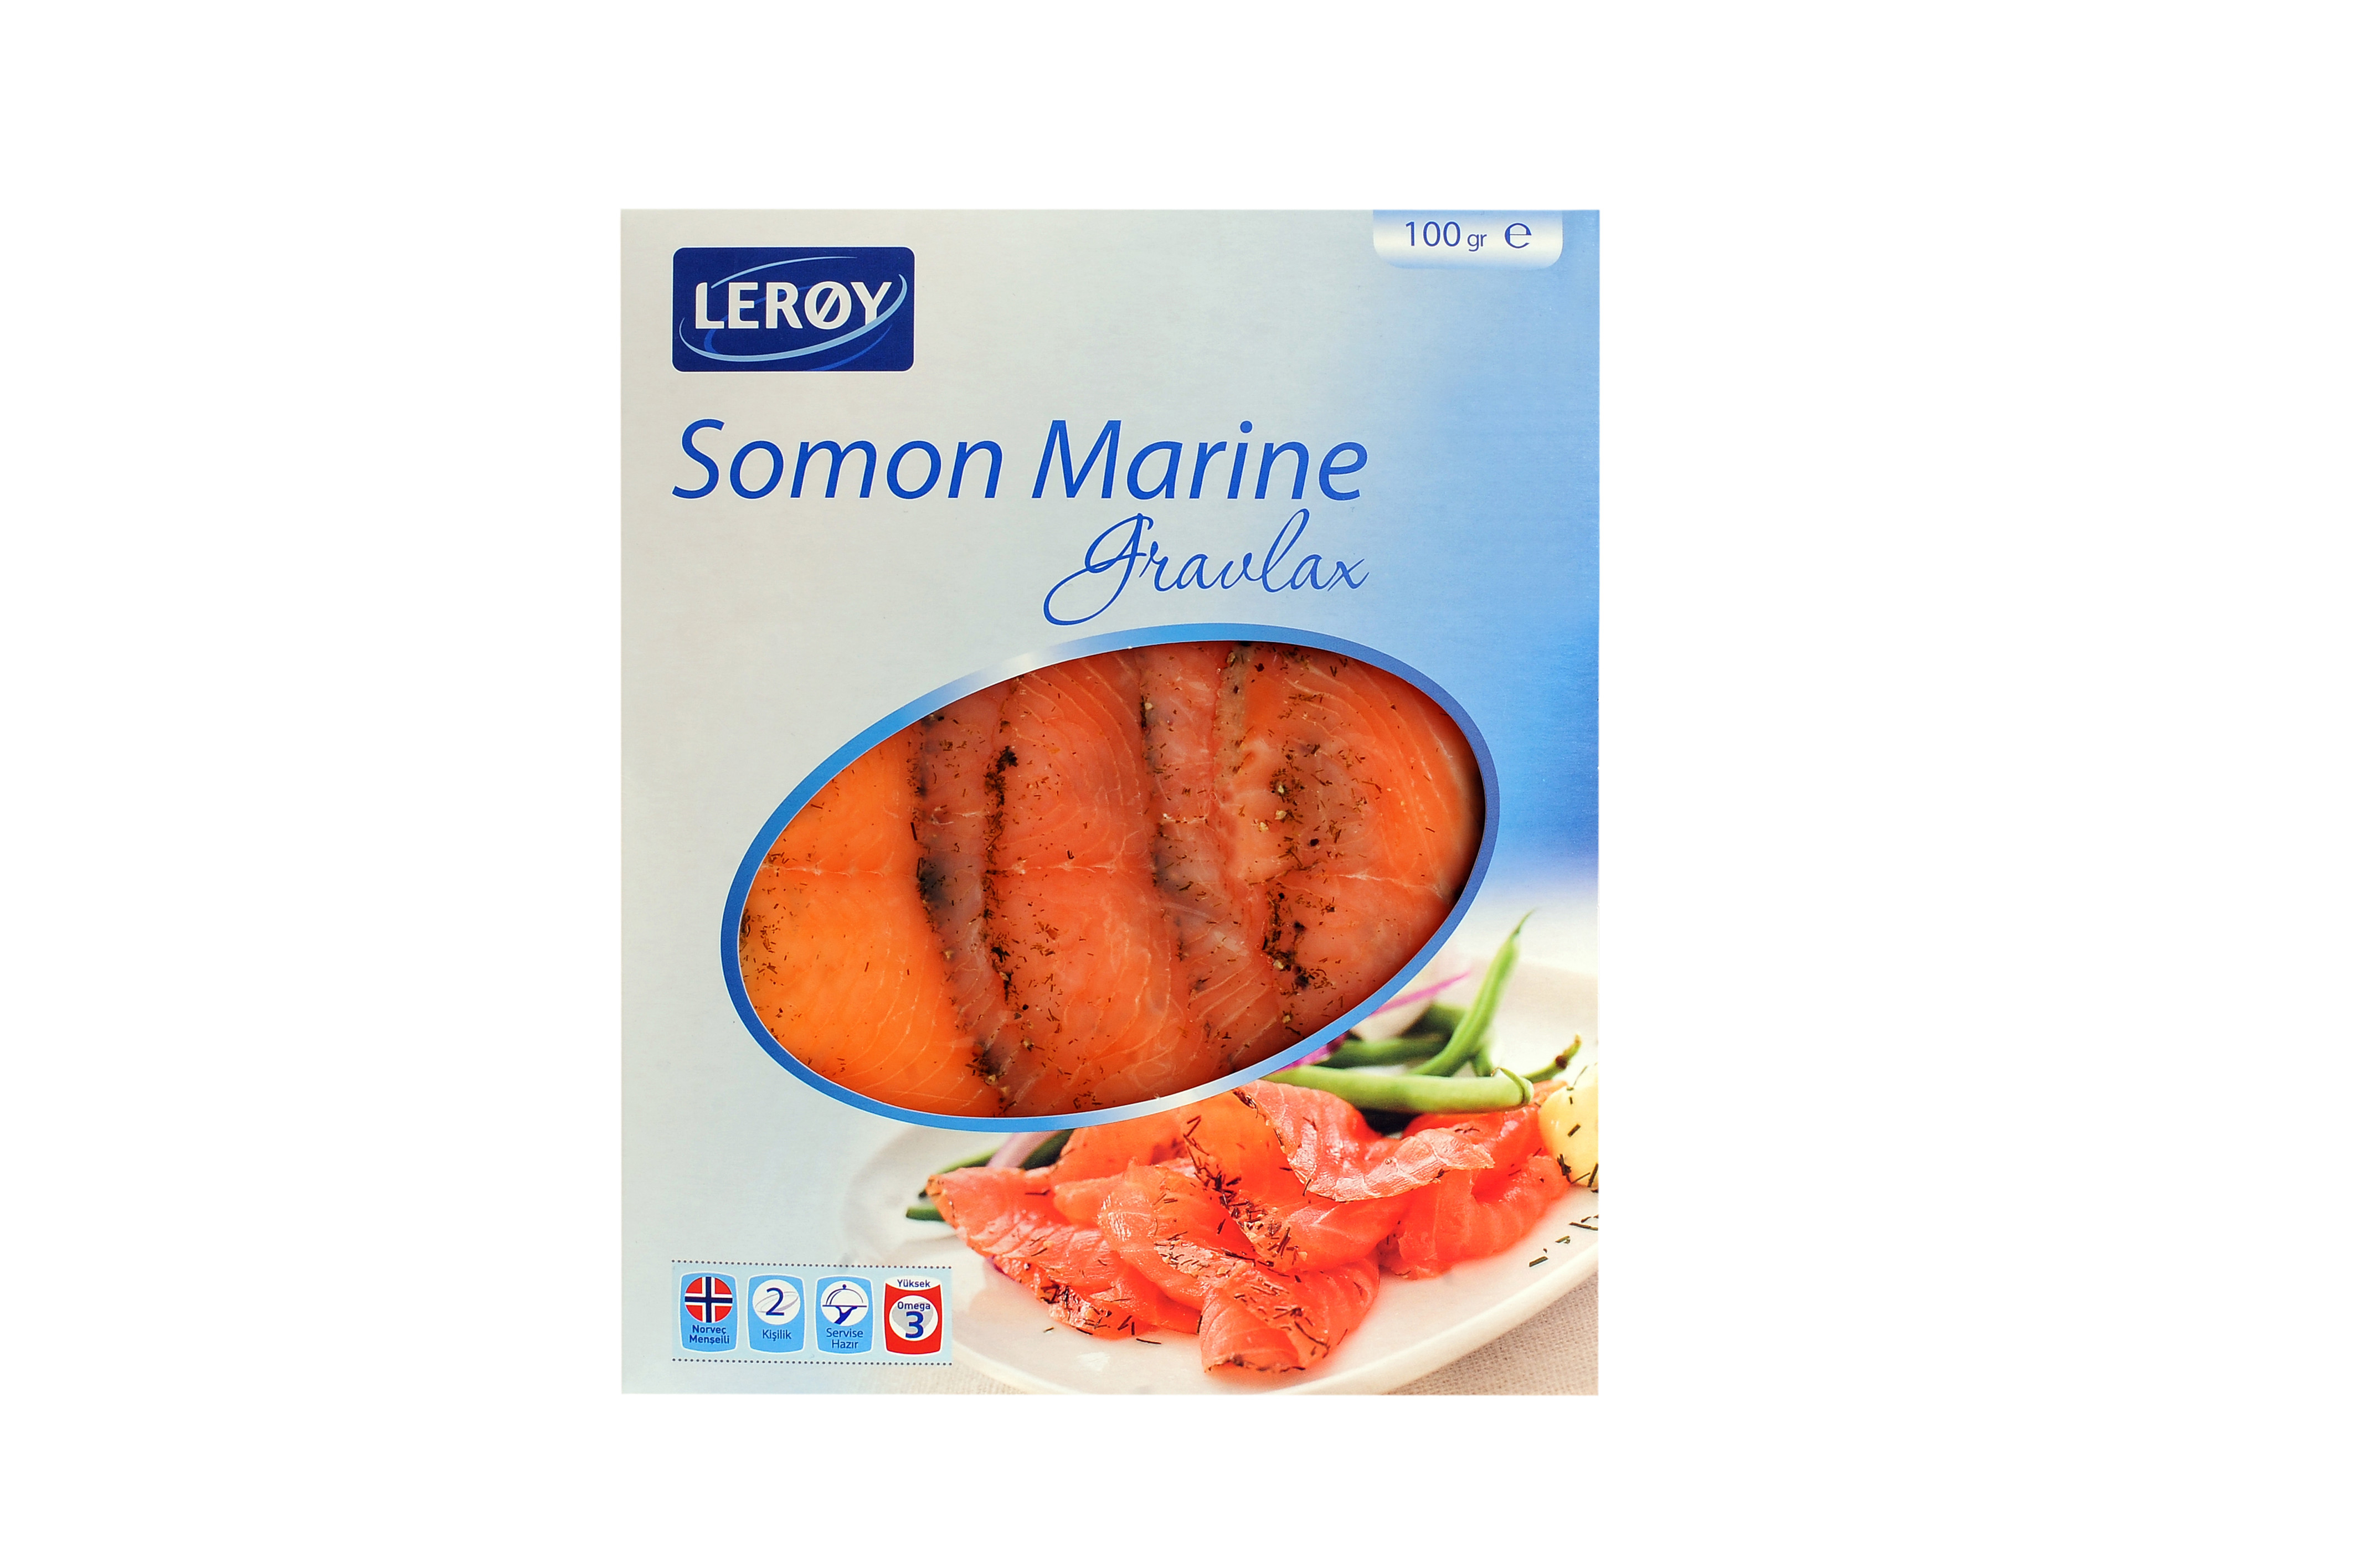 Leröy Süper Kalite Somon Marine (Gravdlax) 100g